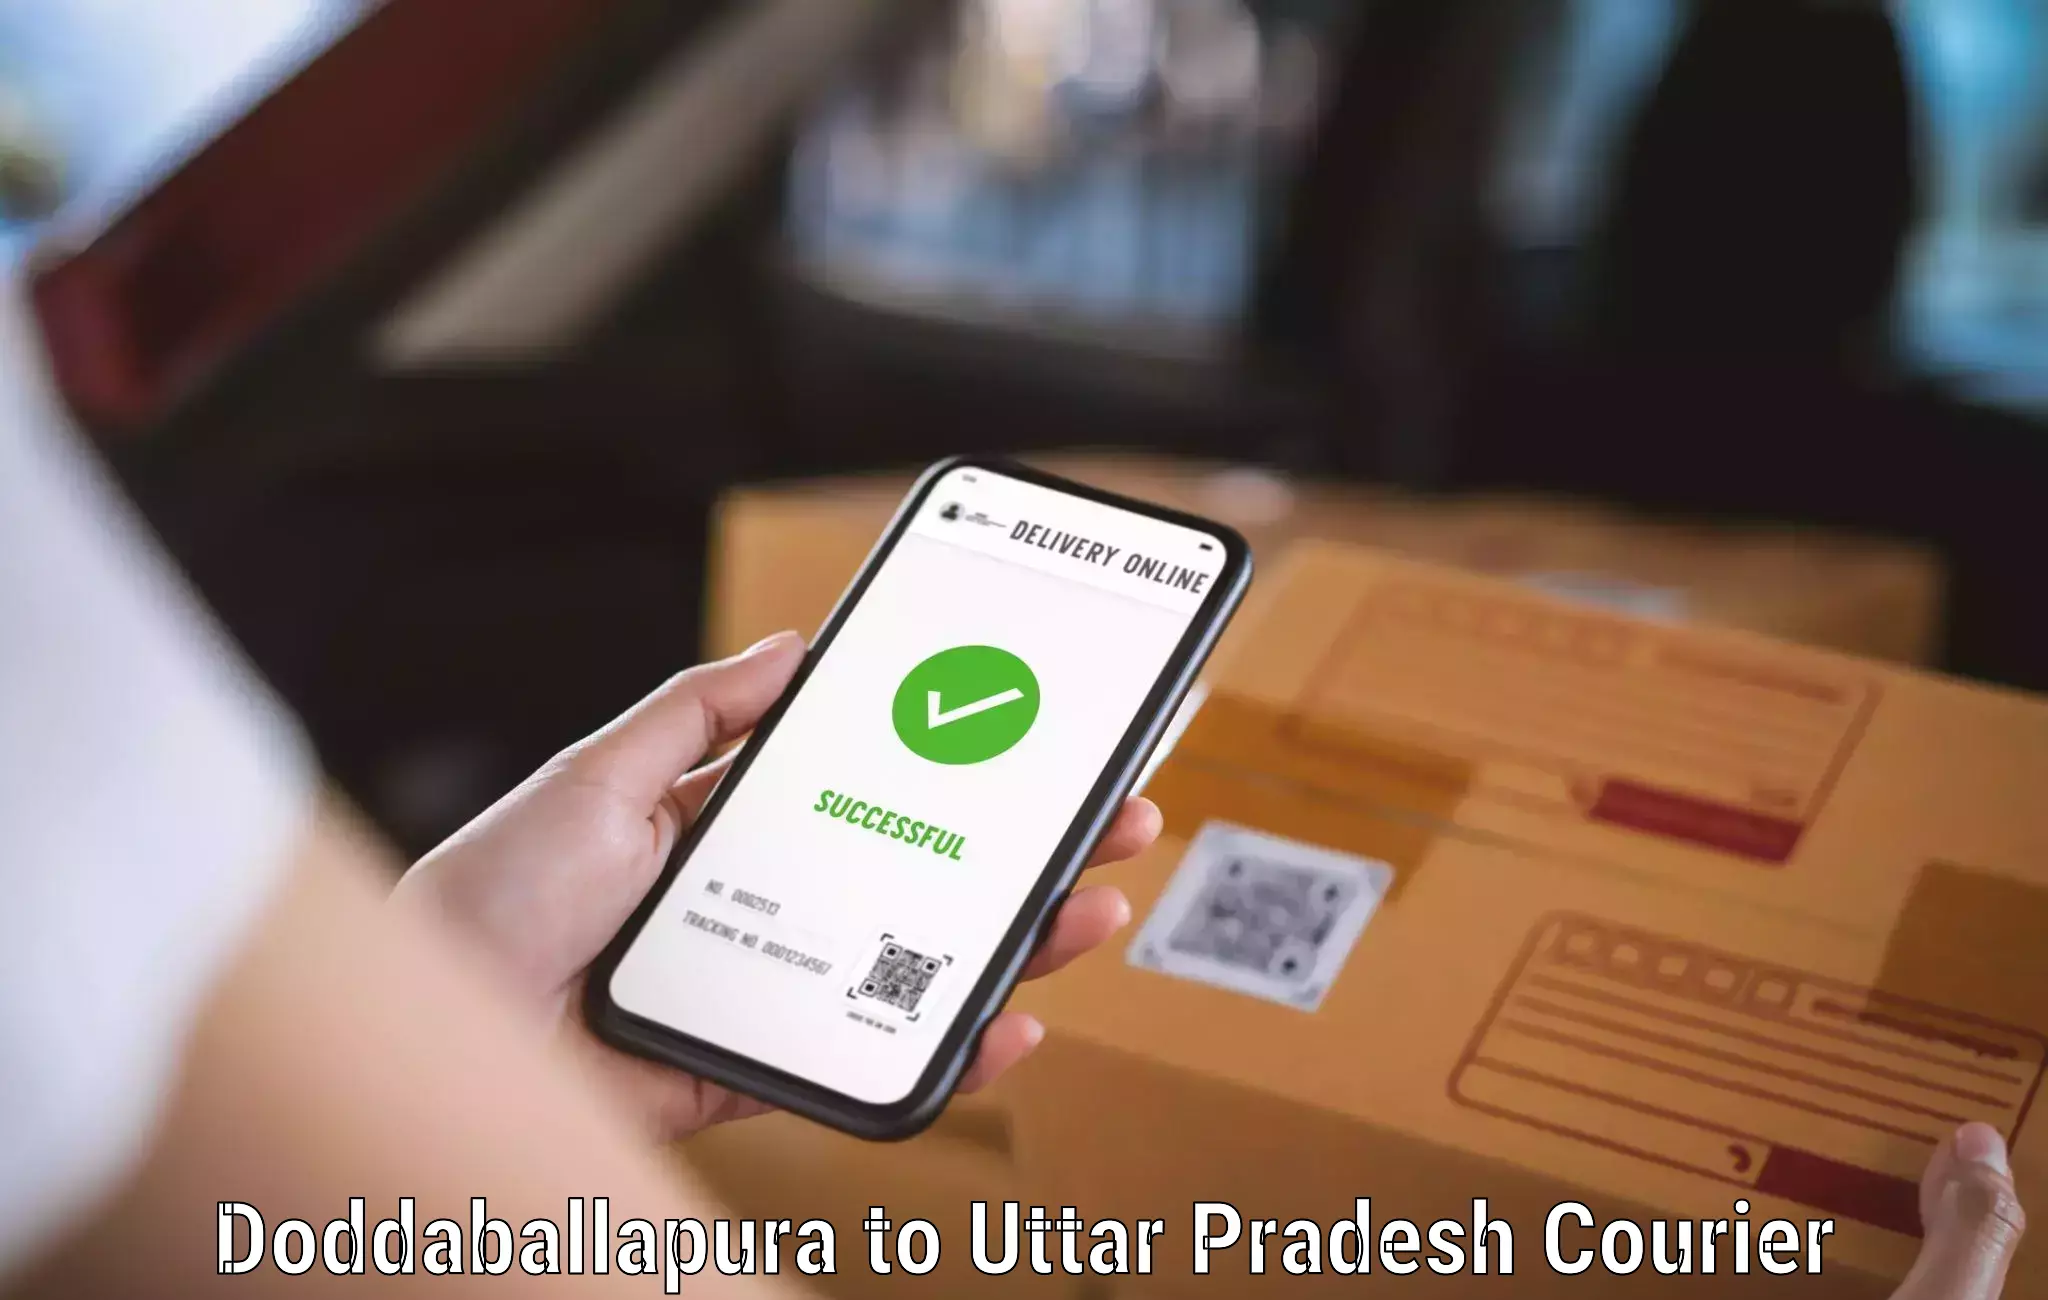 Expedited parcel delivery Doddaballapura to Malihabad